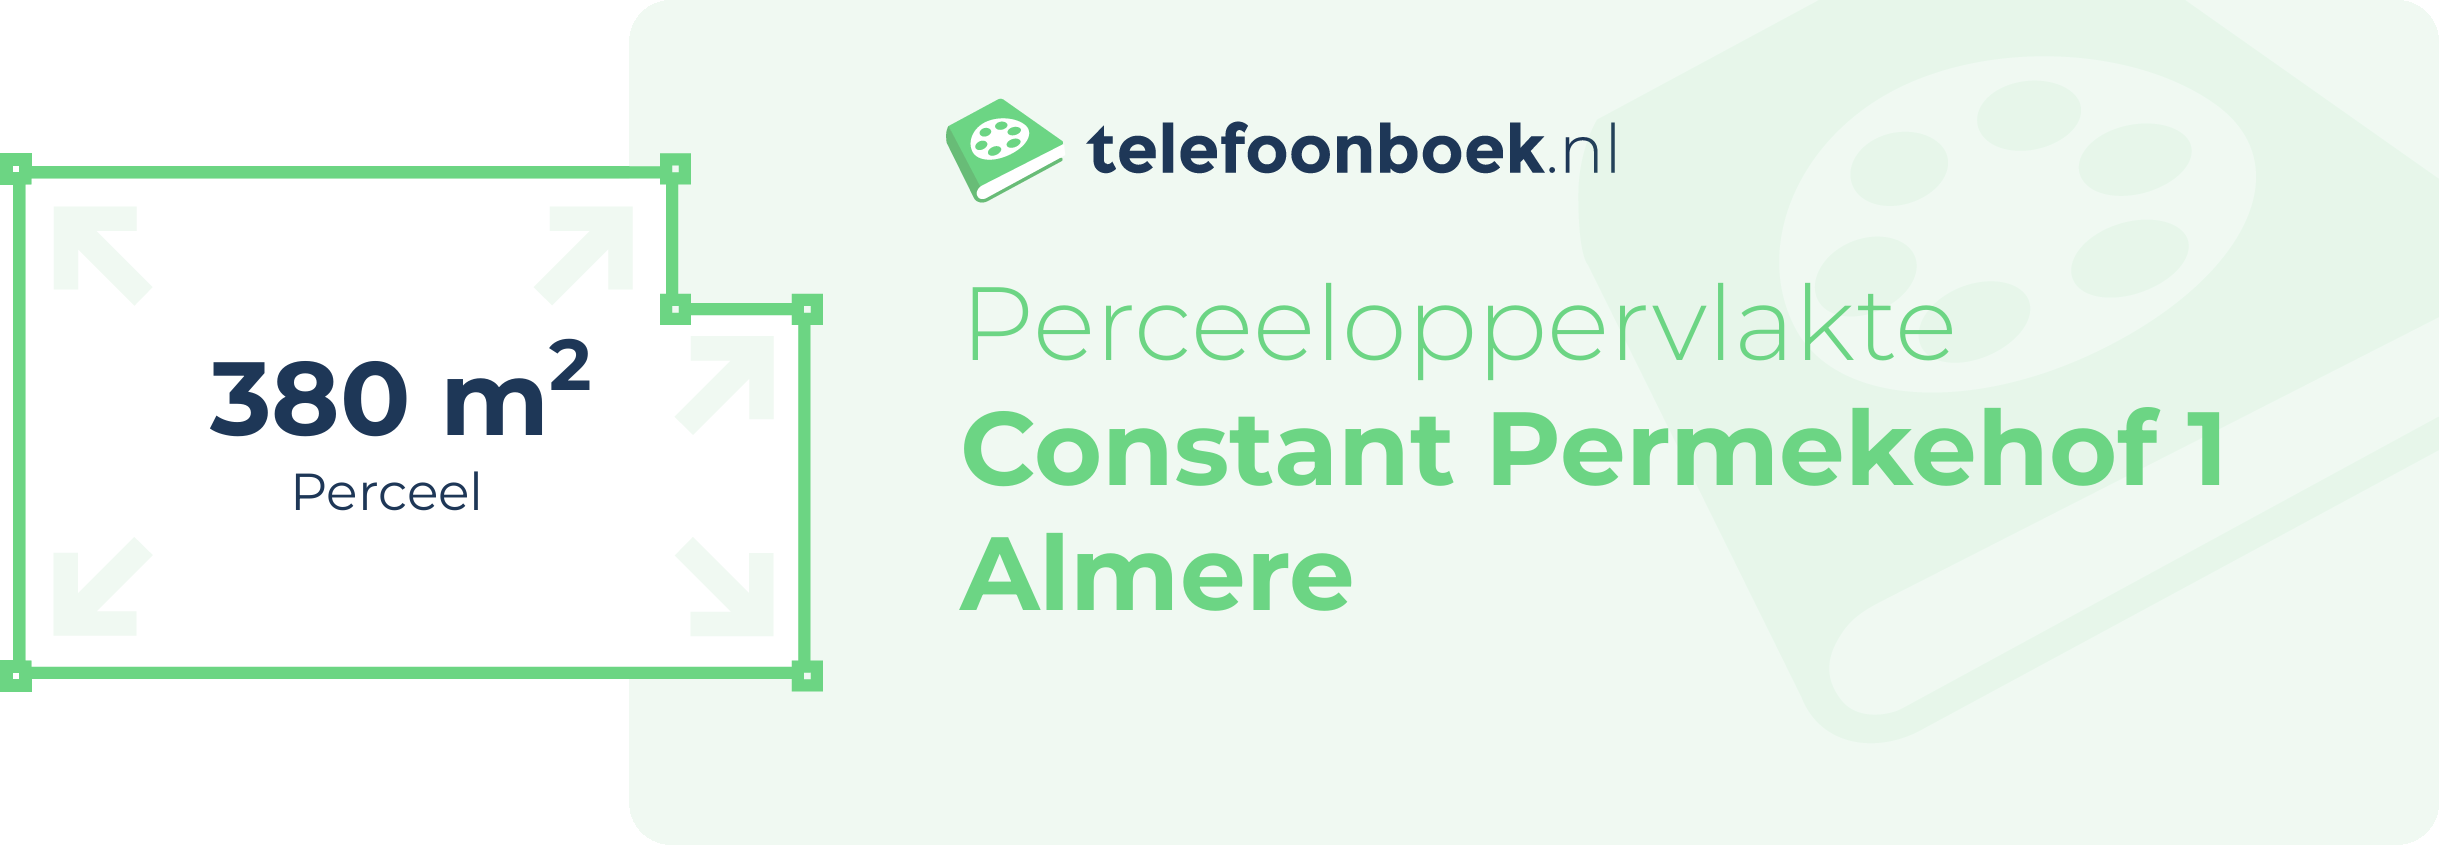 Perceeloppervlakte Constant Permekehof 1 Almere